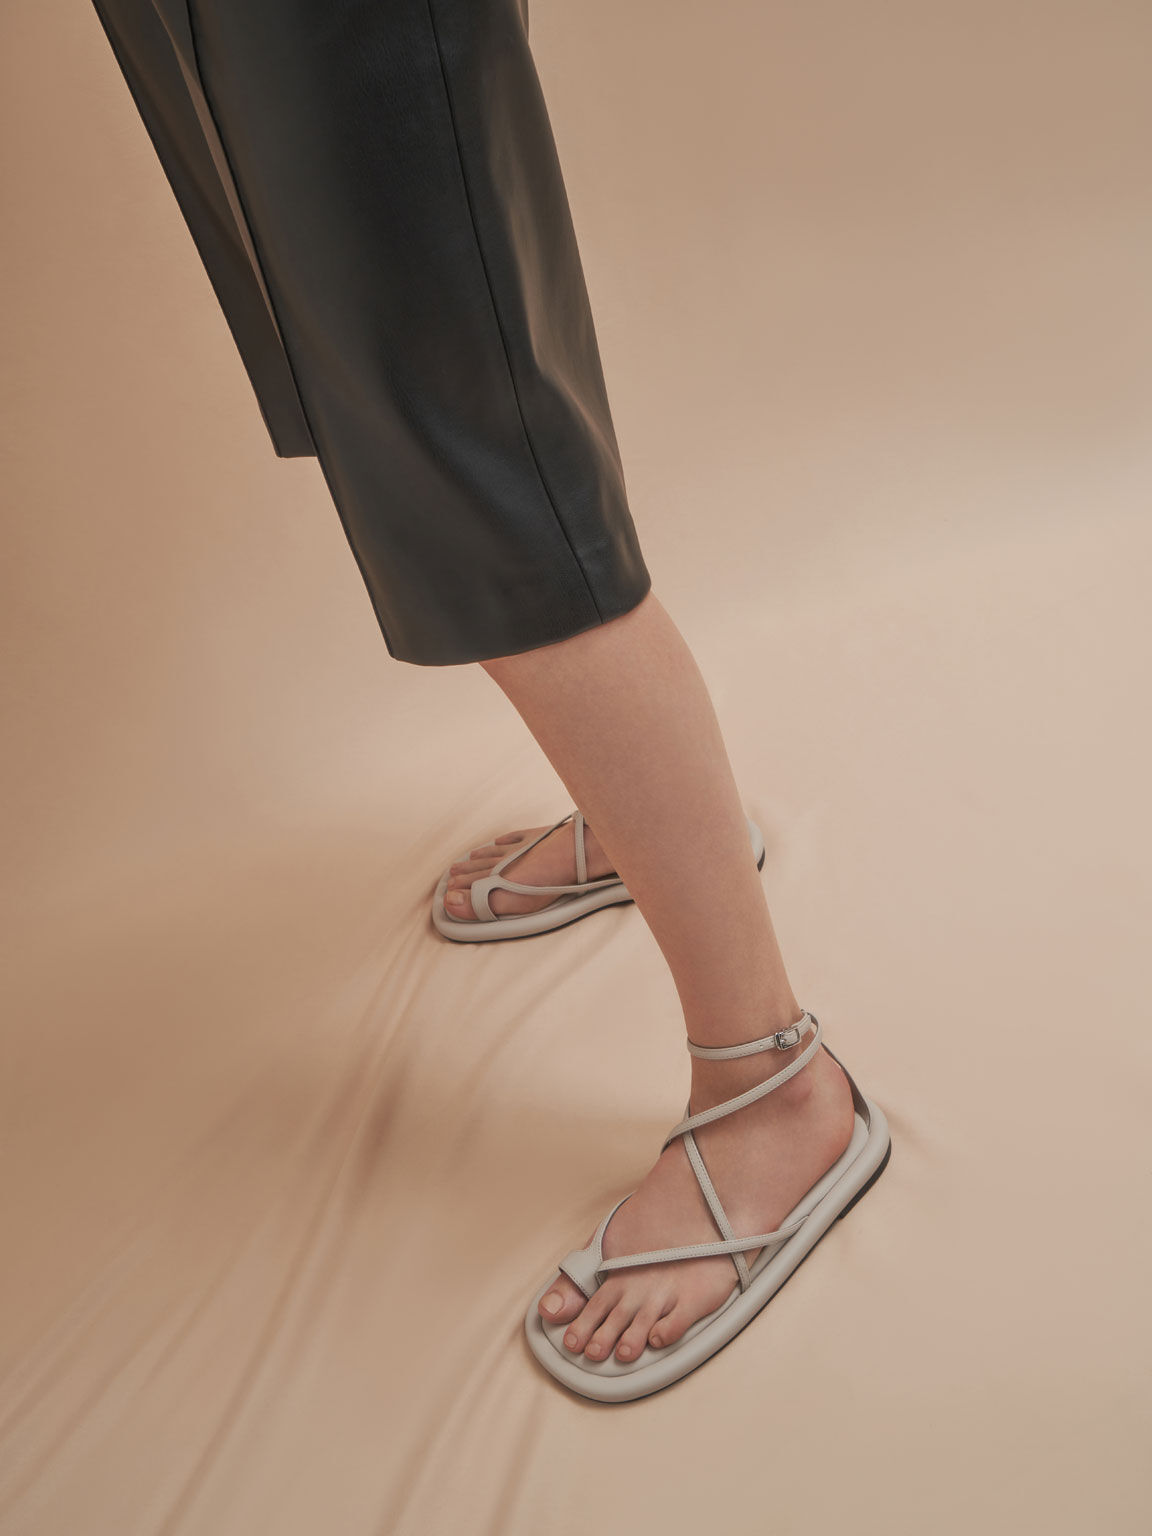 Padded Toe Loop Sandals, Grey, hi-res